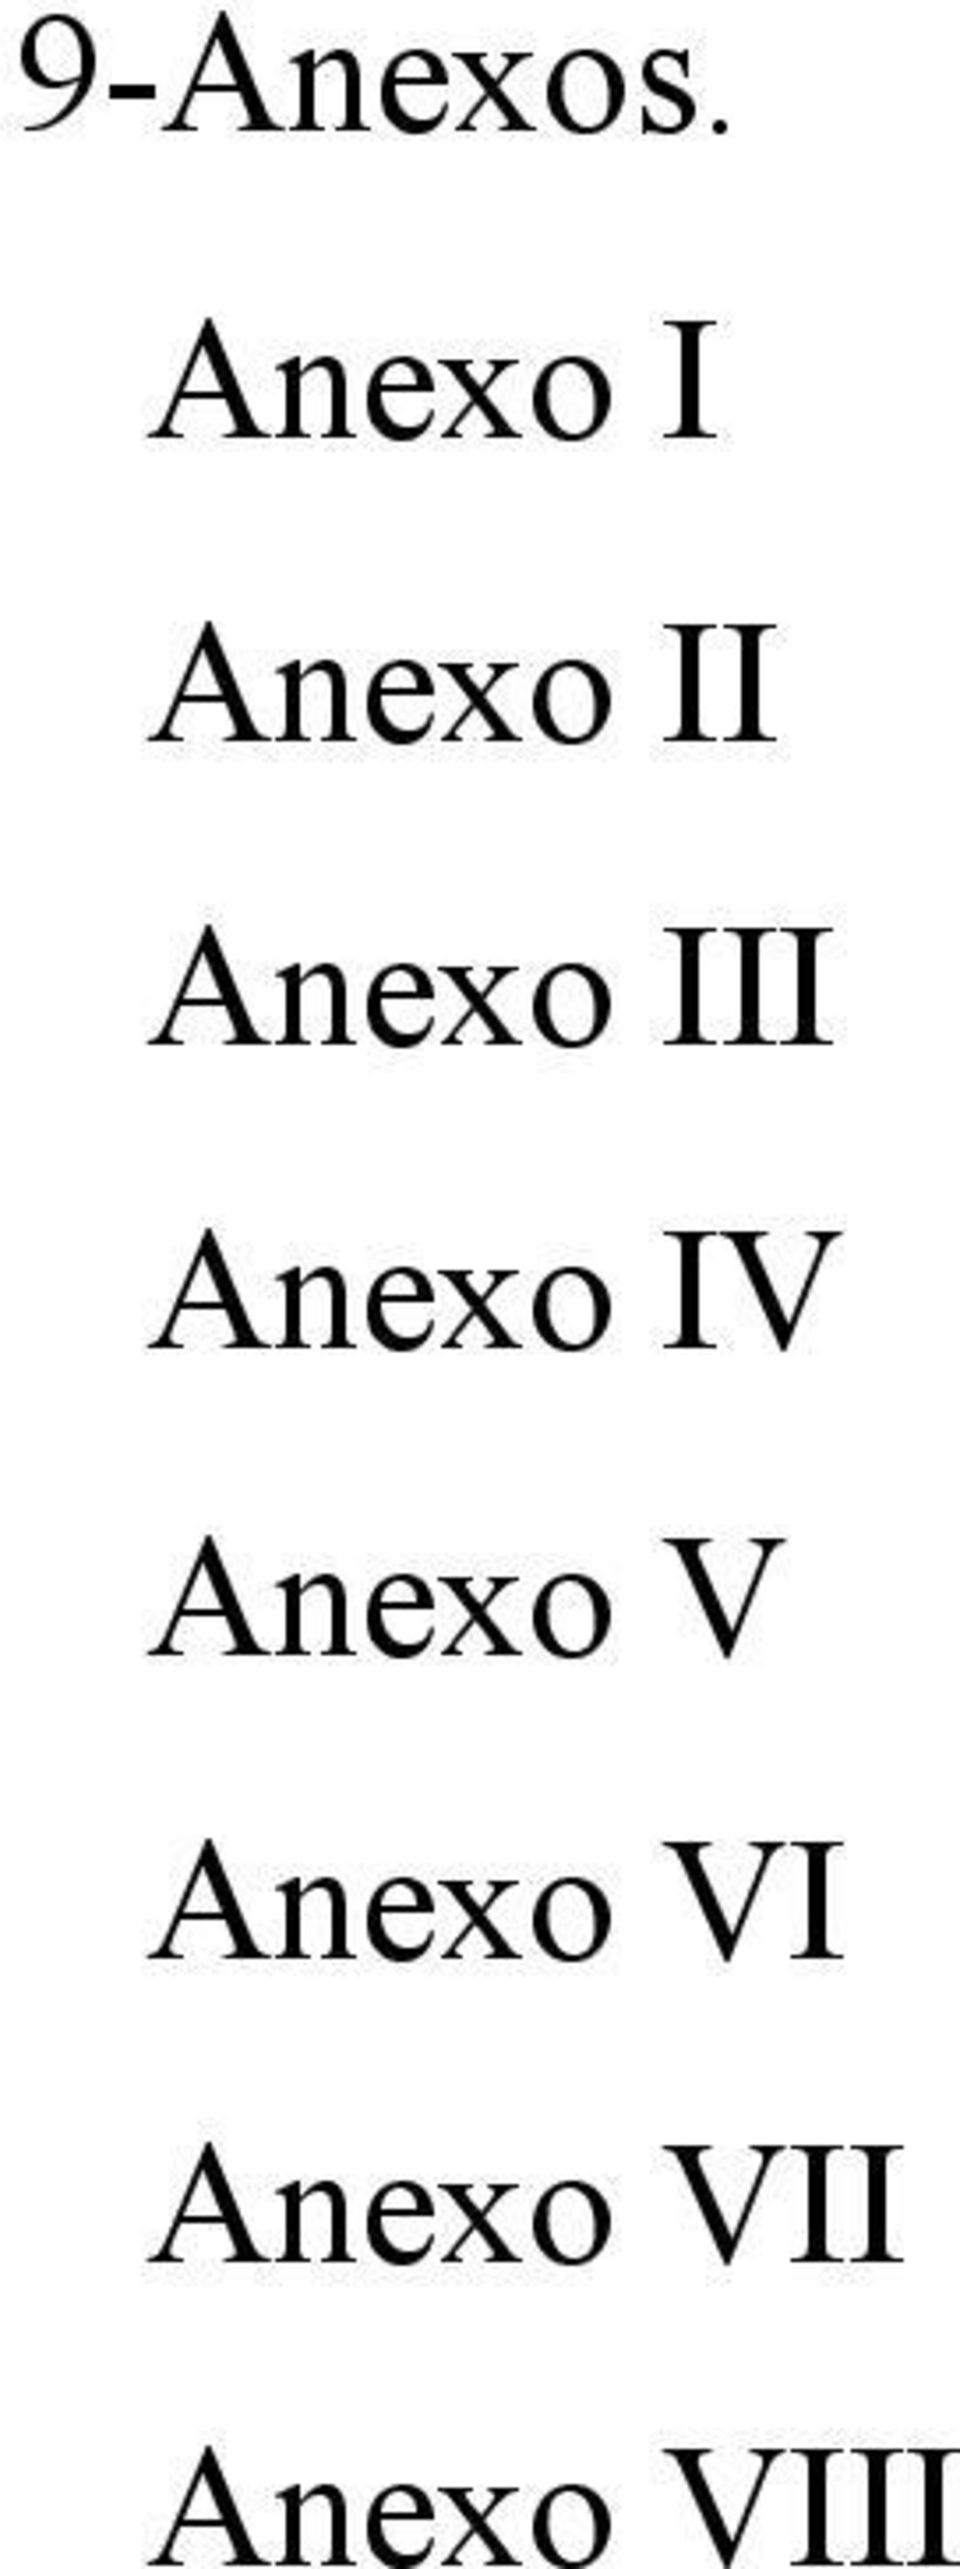 Anexo III Anexo IV